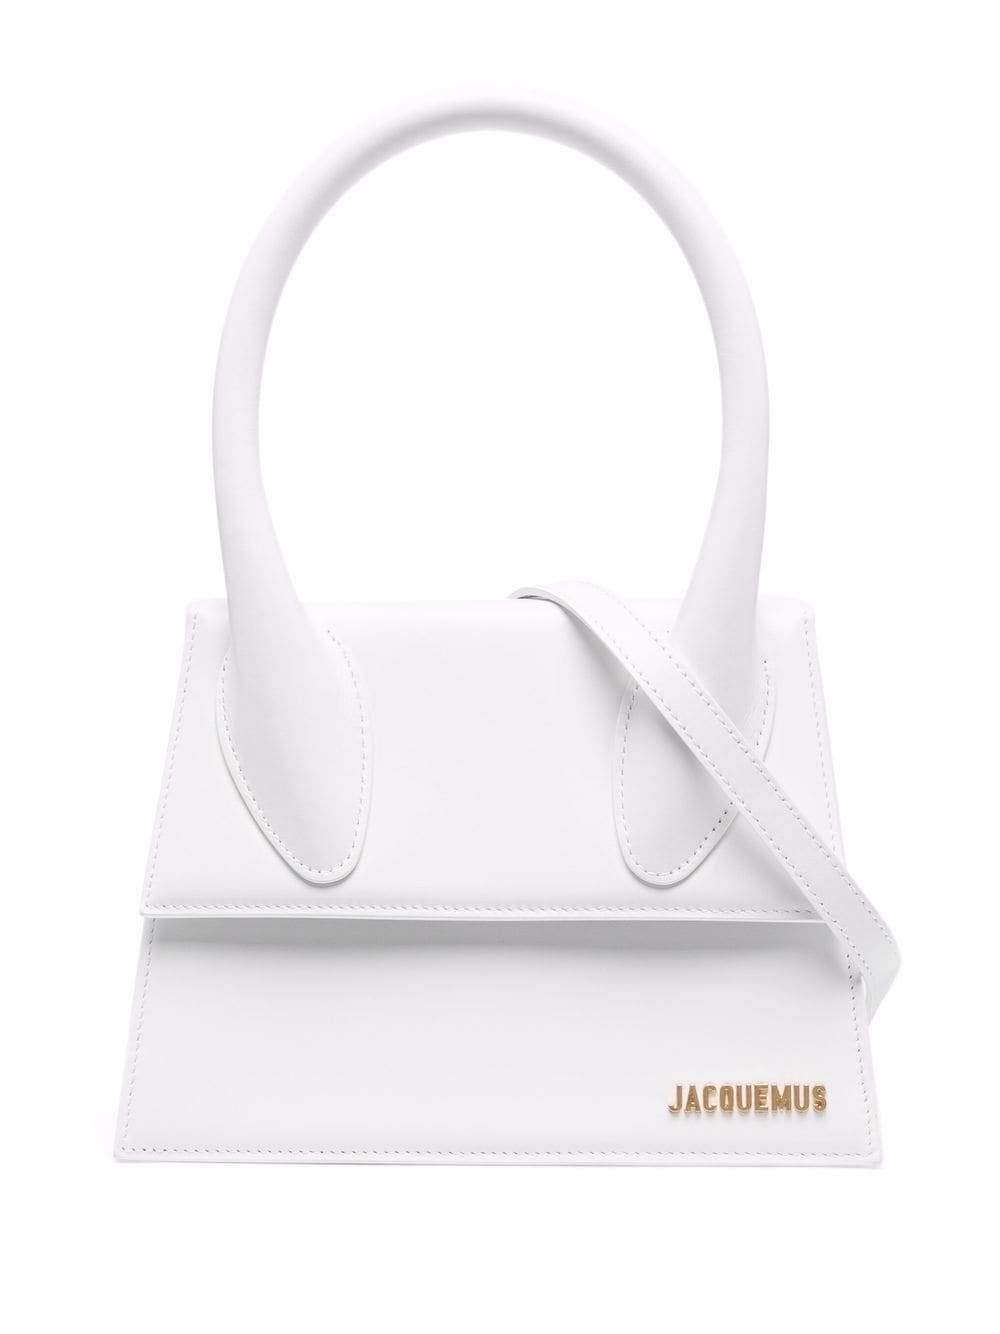 Jacquemus "le Grand Chiquito" Bag In White